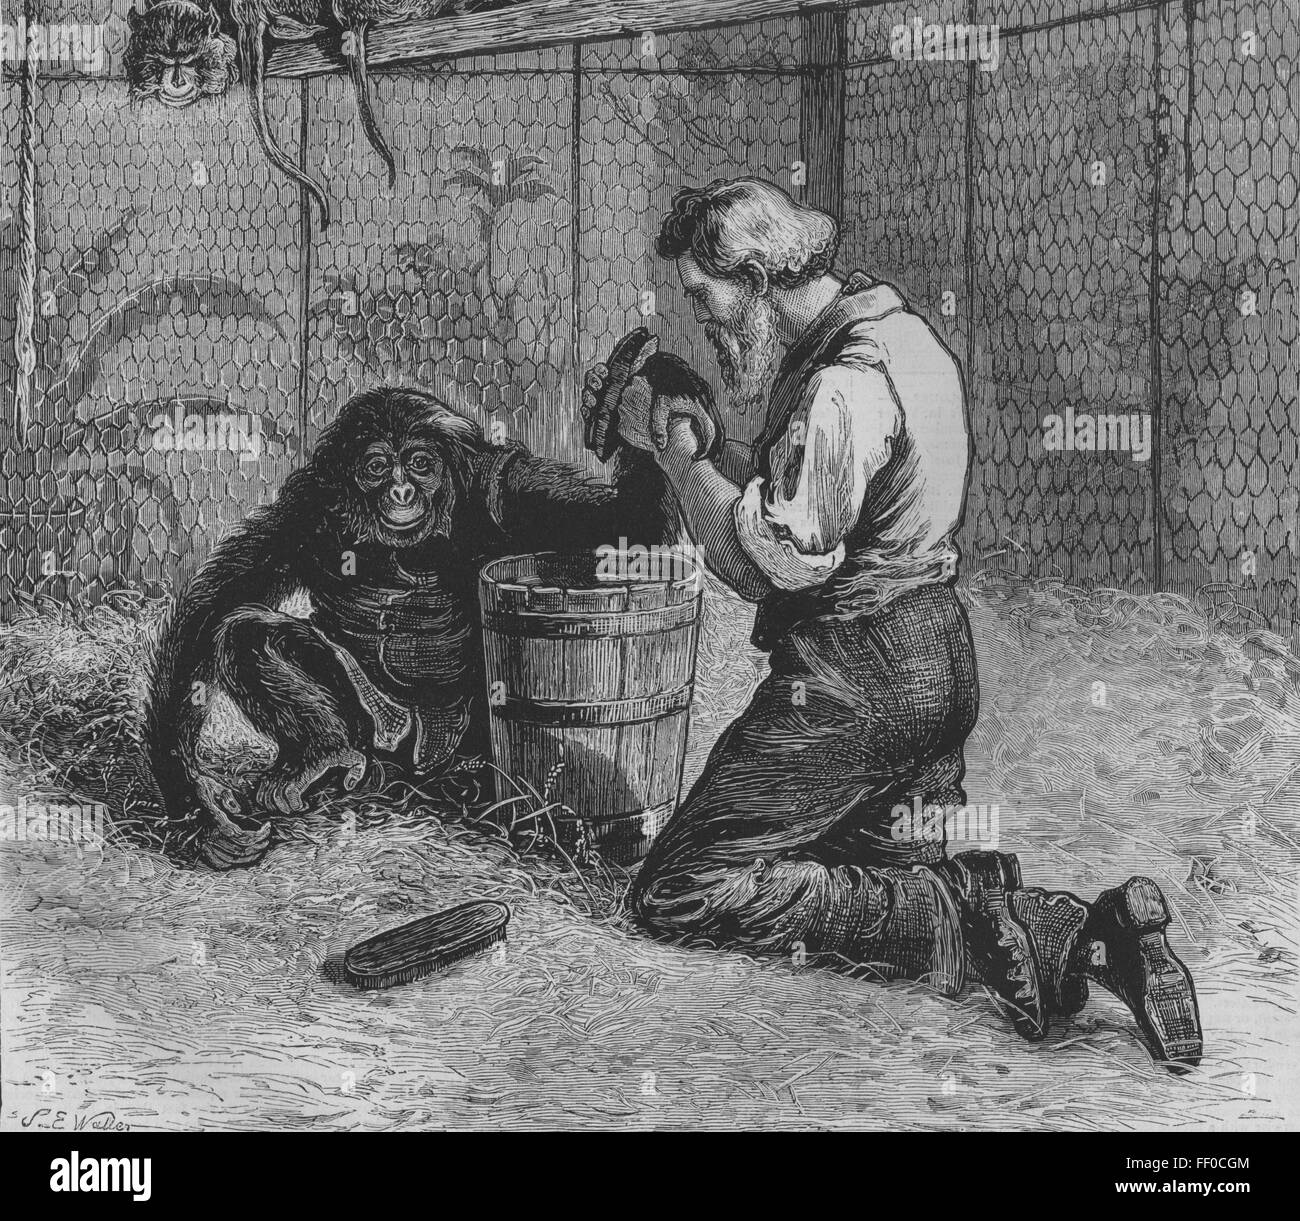 MONKEYS Tending a sick Monkey, London zoo 1874. The Graphic Stock Photo